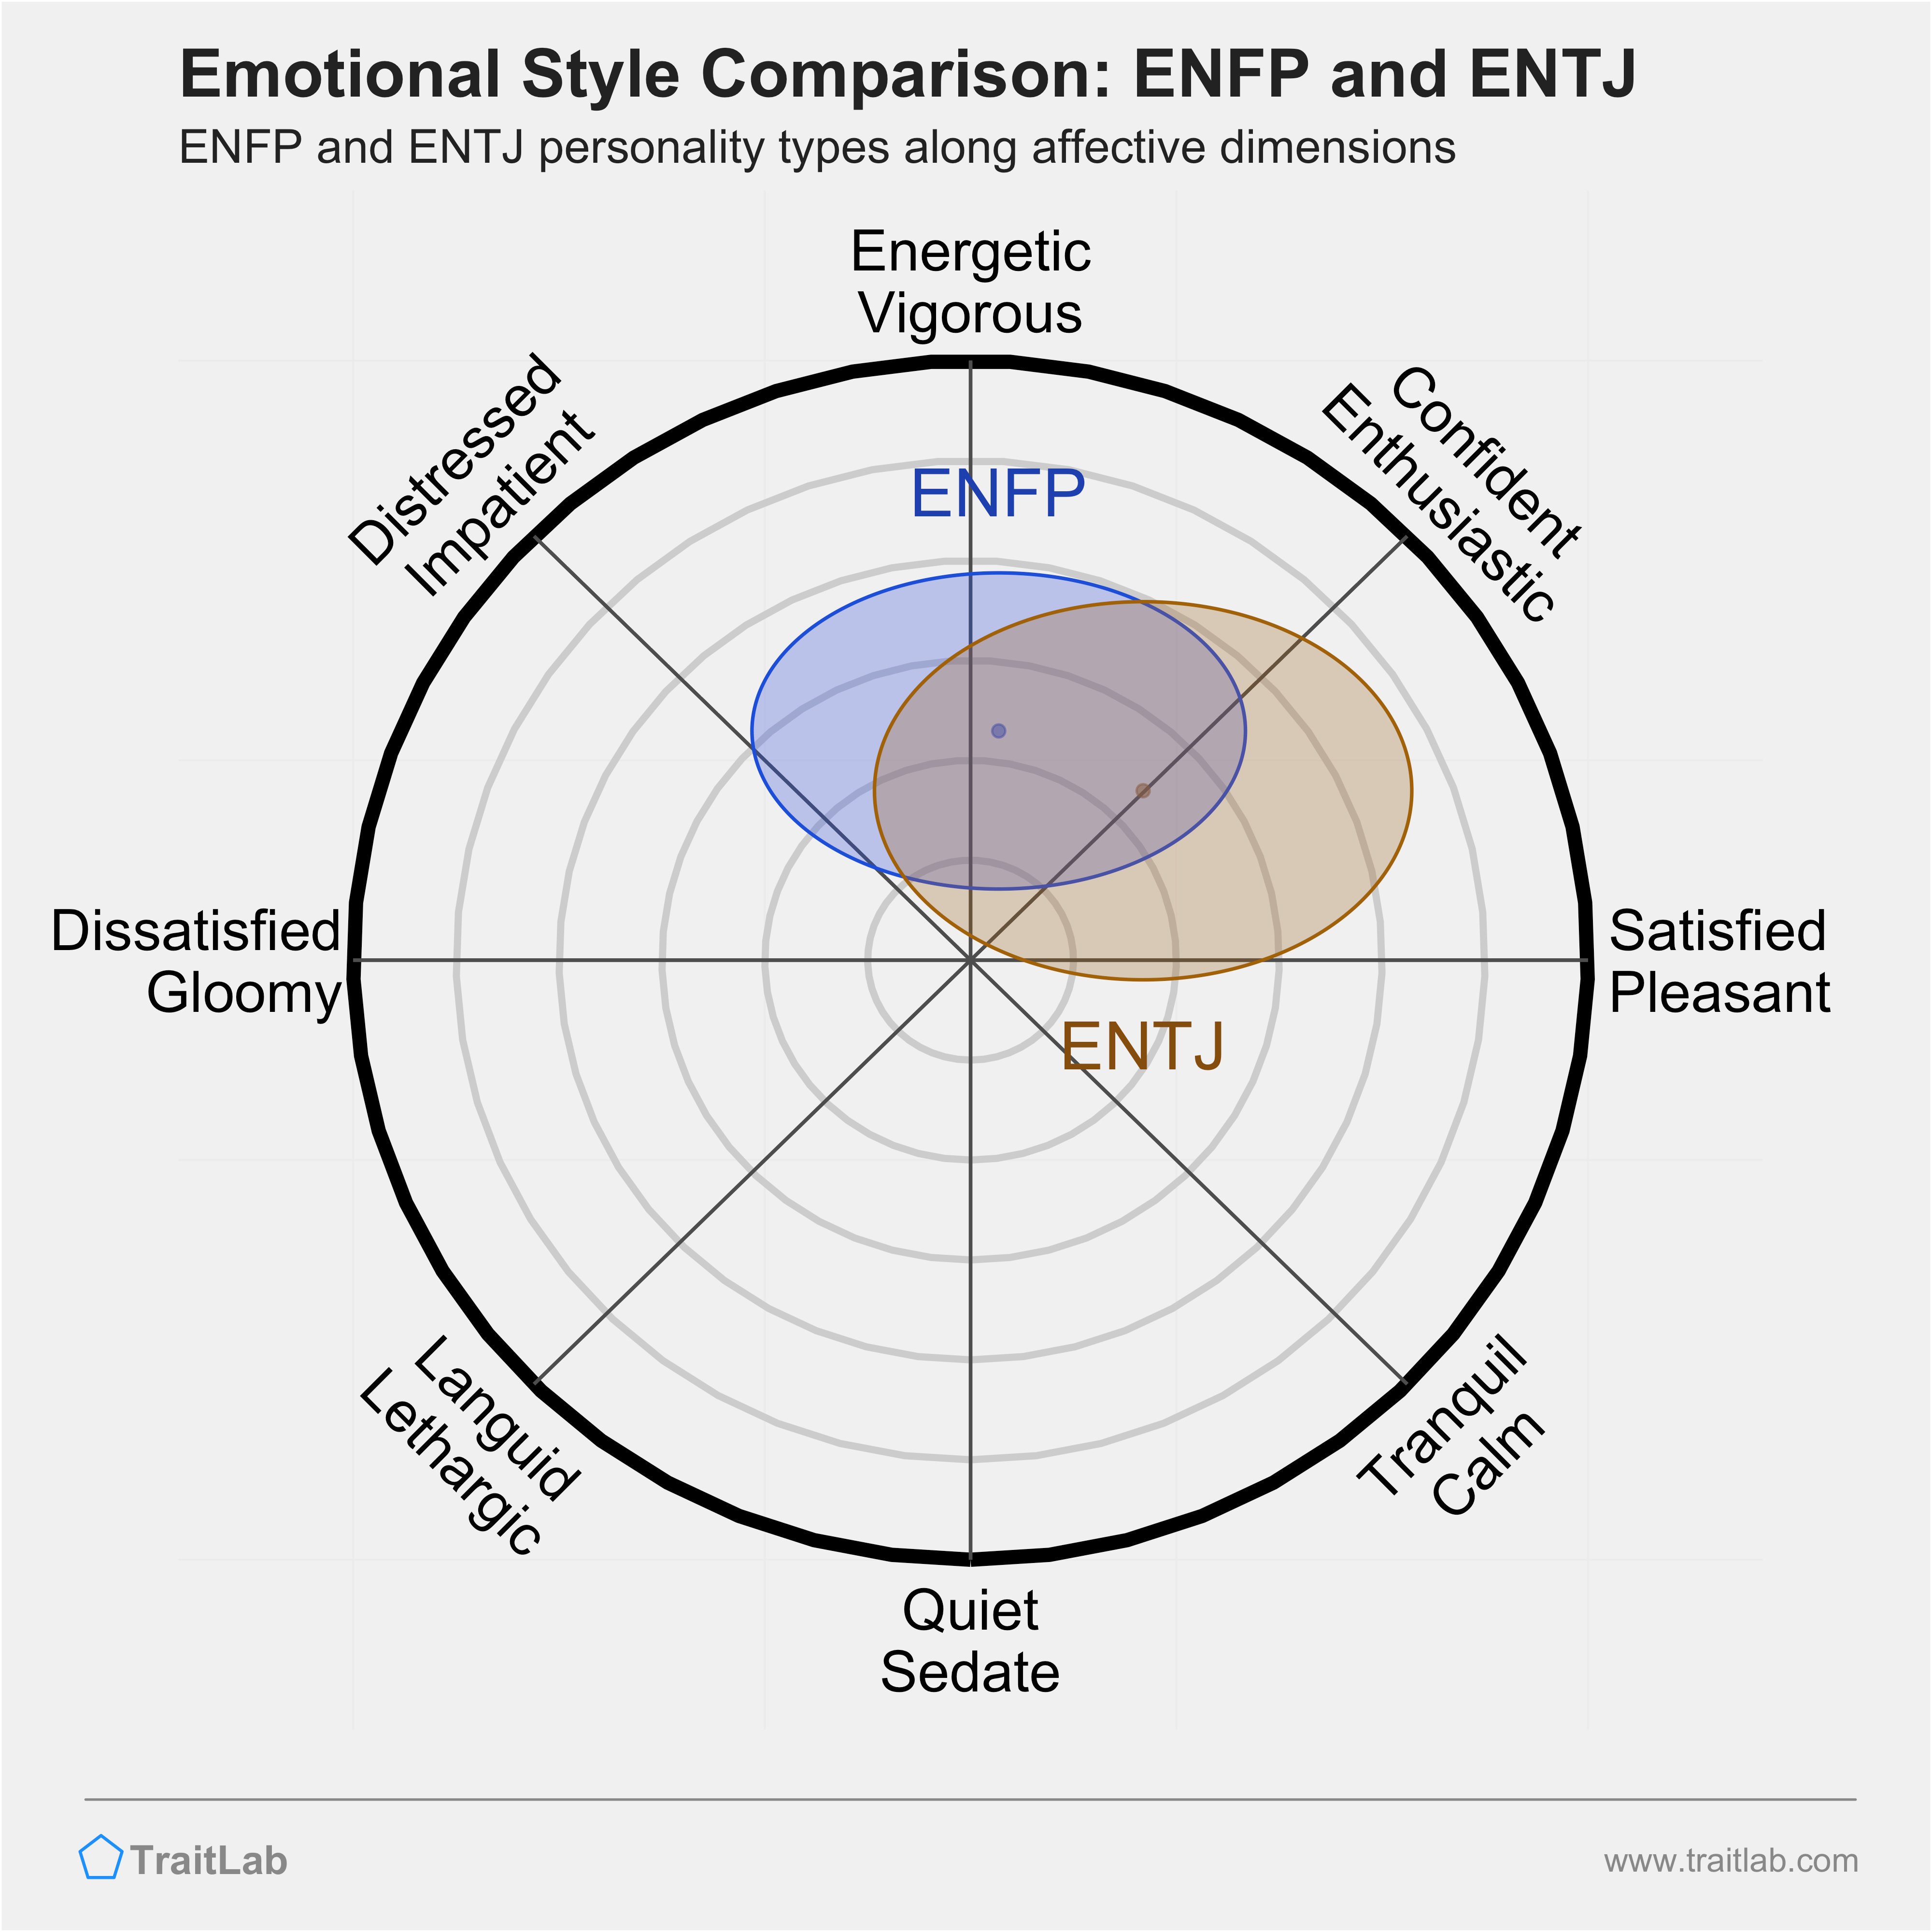 ENFP and ENTJ comparison across emotional (affective) dimensions